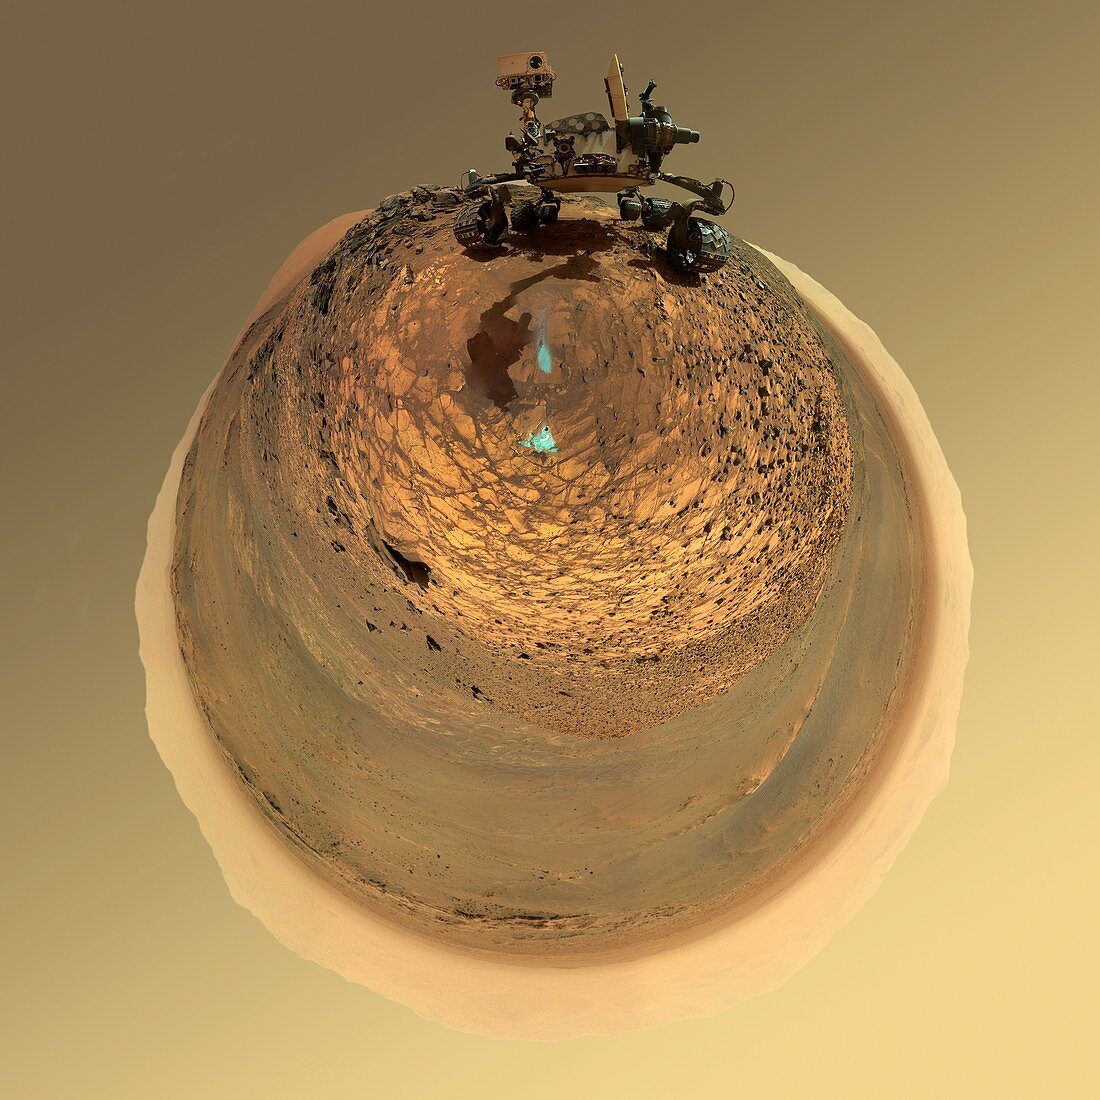 Mars Curiosity rover self-portrait